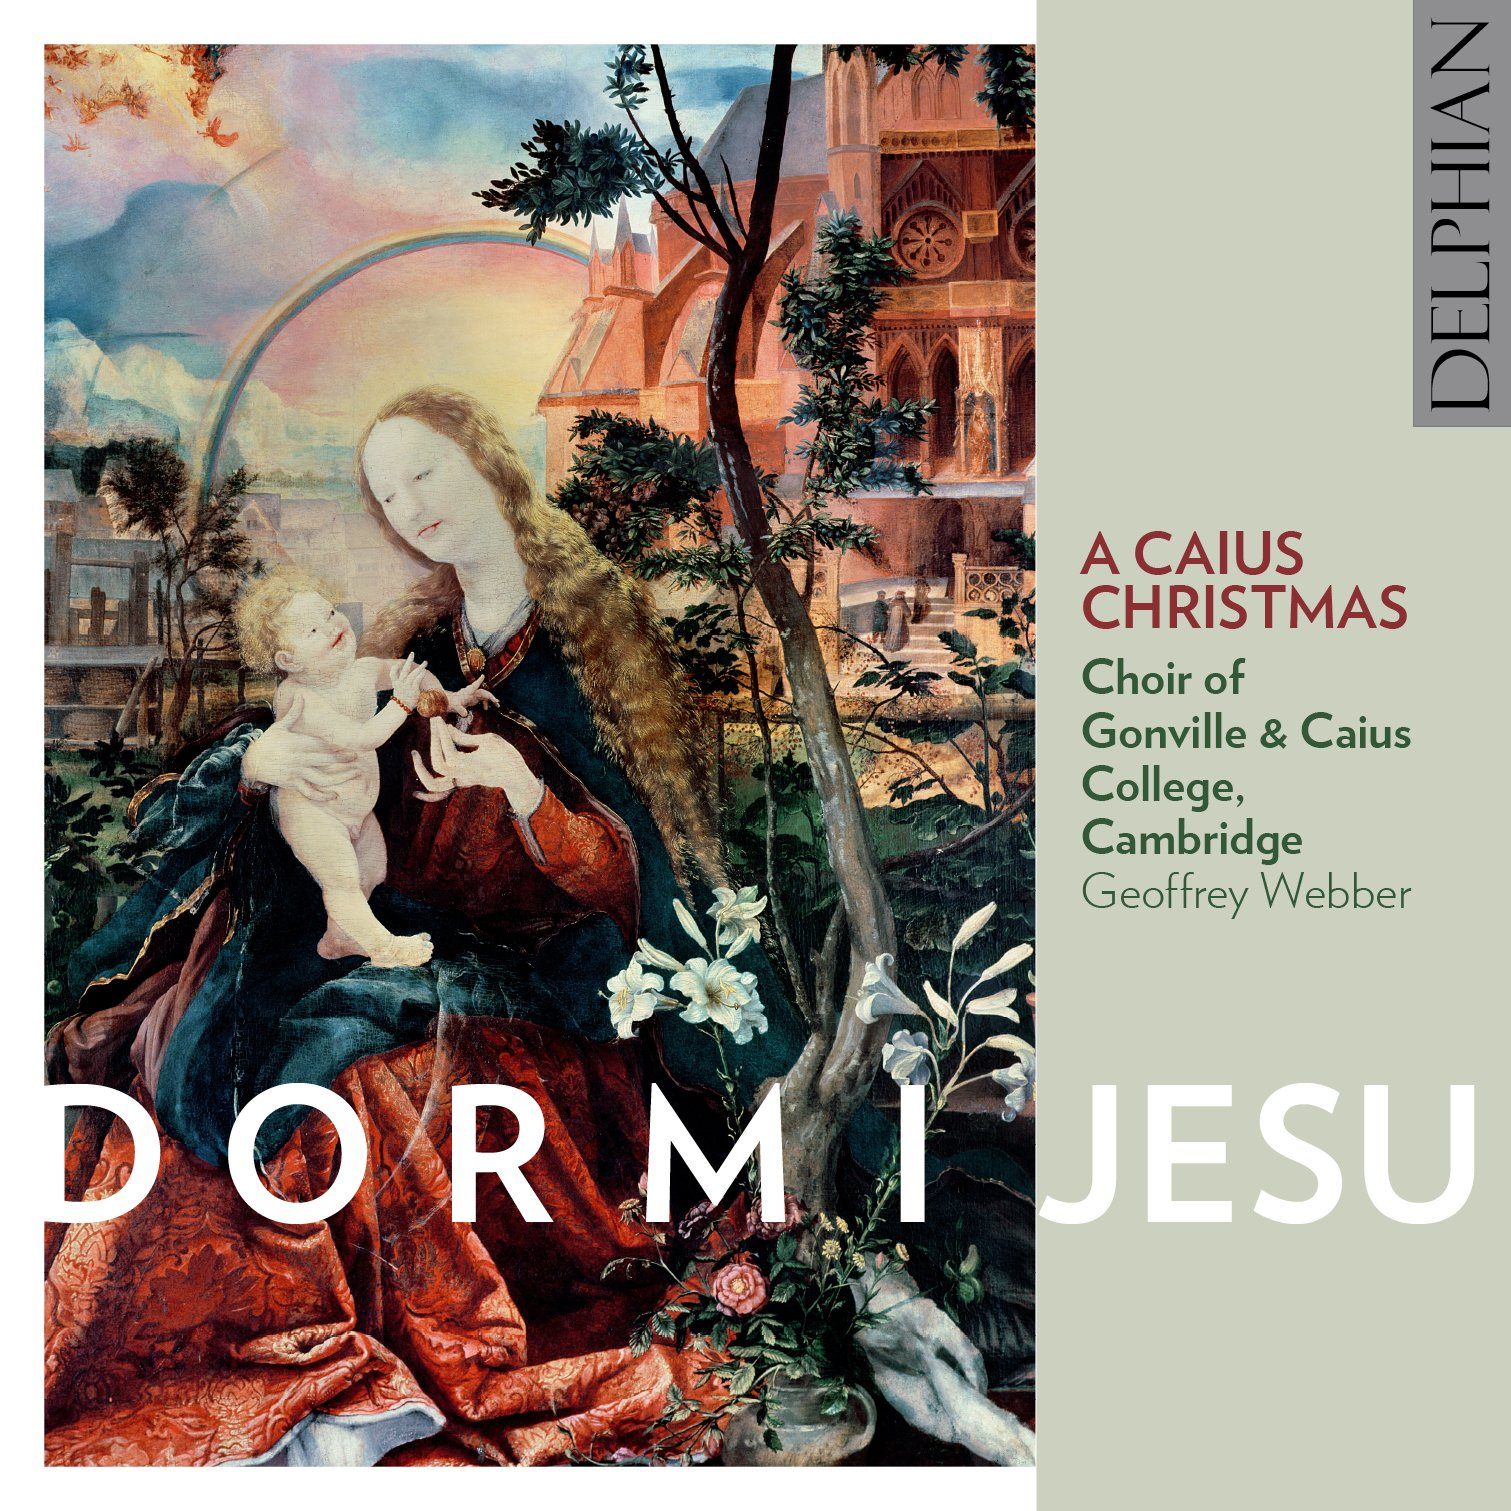 Dormi Jesu: A Caius Christmas CD Delphian Records